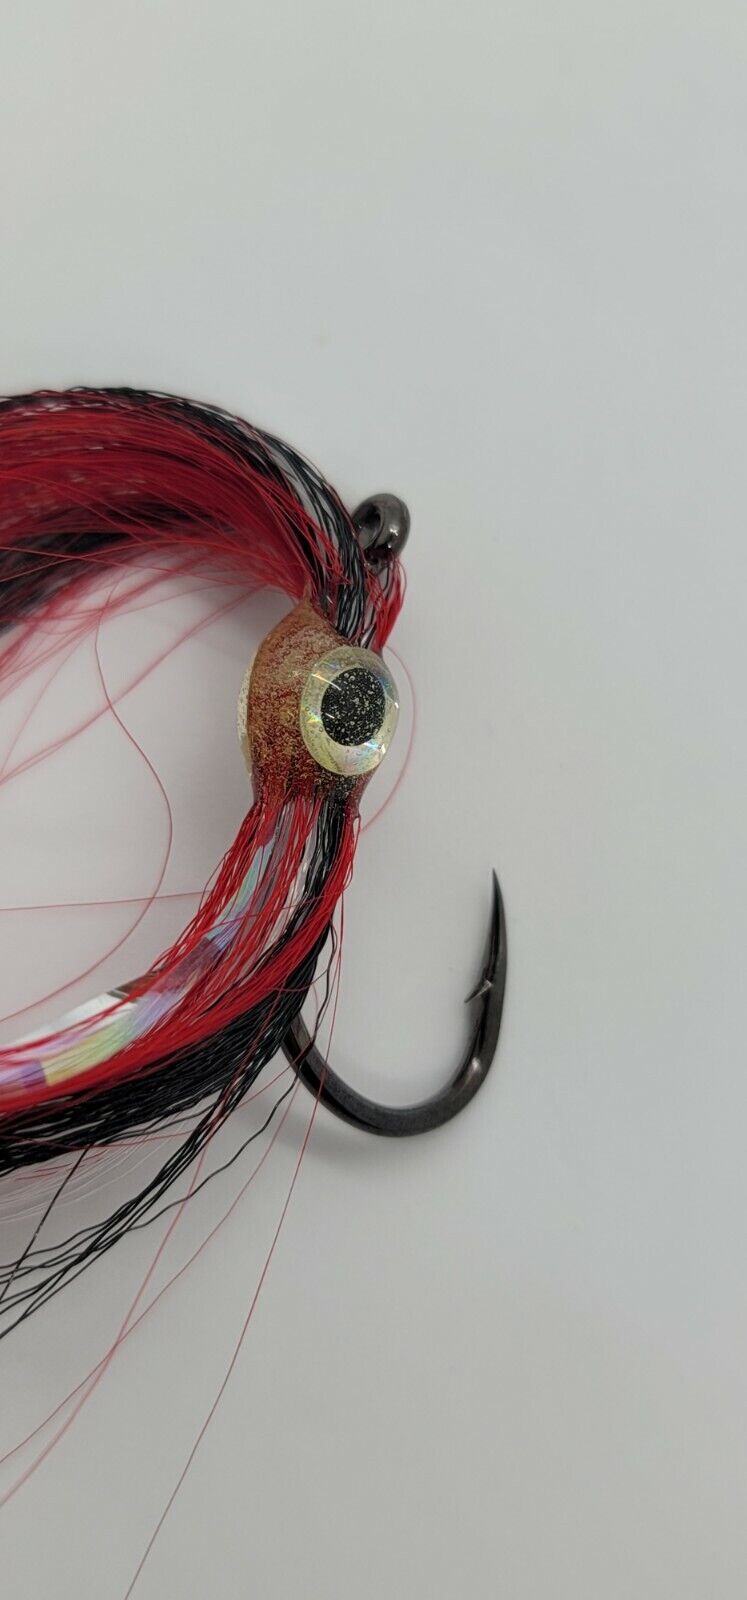 Fishing Flies Teaser 6/0 Gamakatsu 2X Hook Saltwater Custom Tied